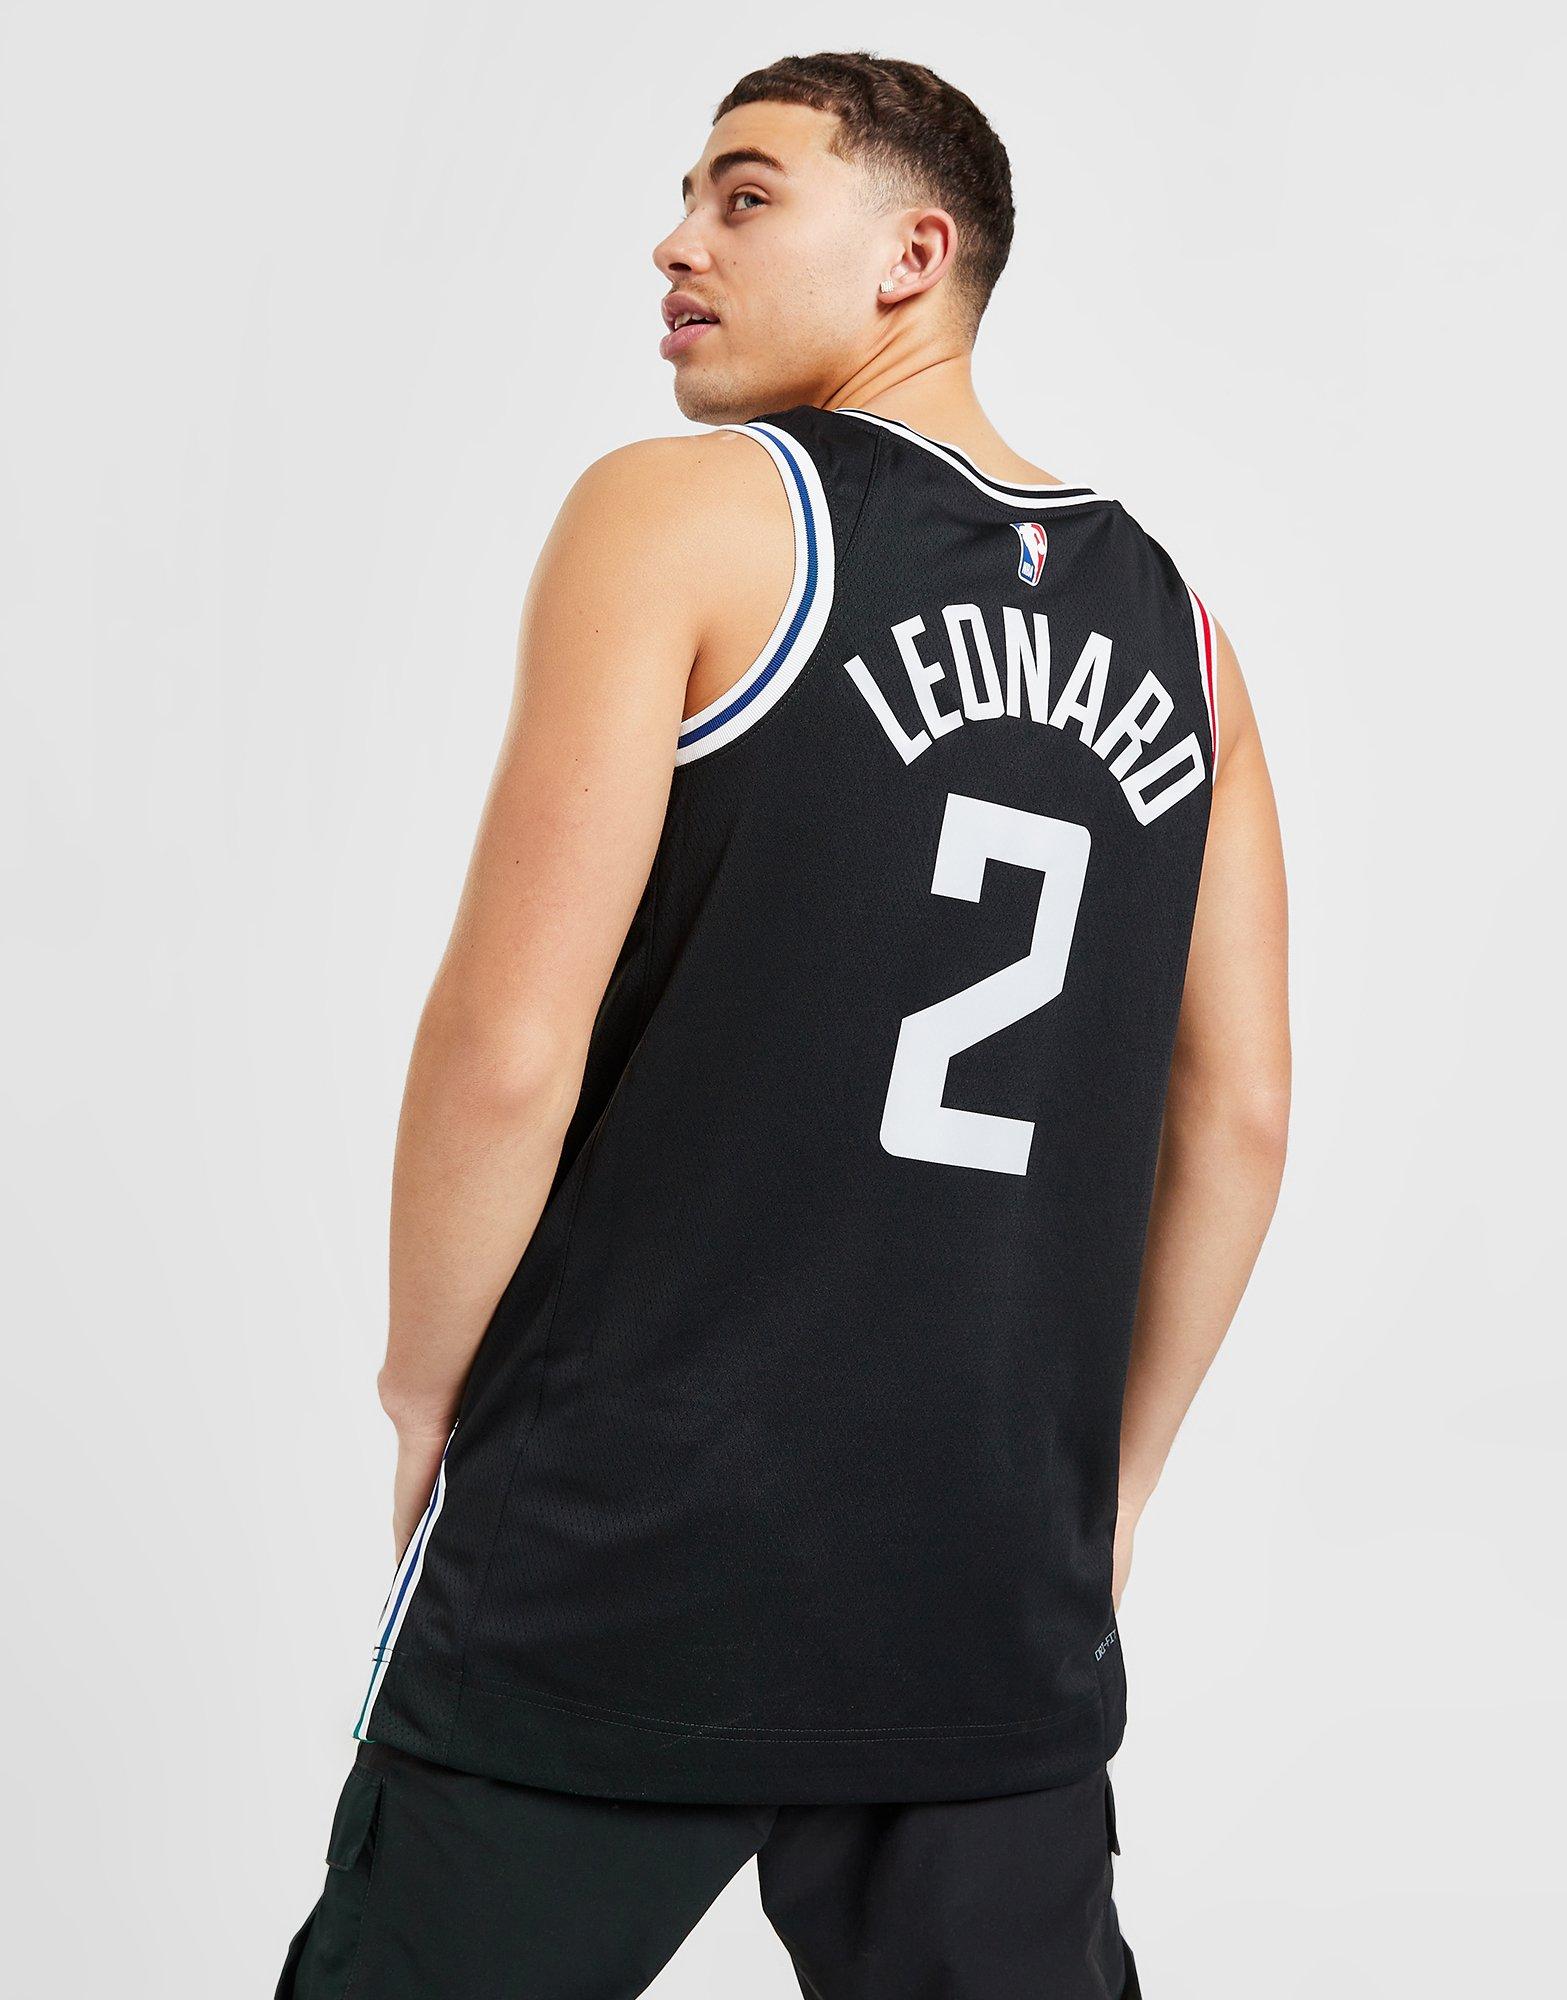 NBA San Antonio Spurs basketball Adidas Grey jersey #2 Kawhi Leonard size  2XL